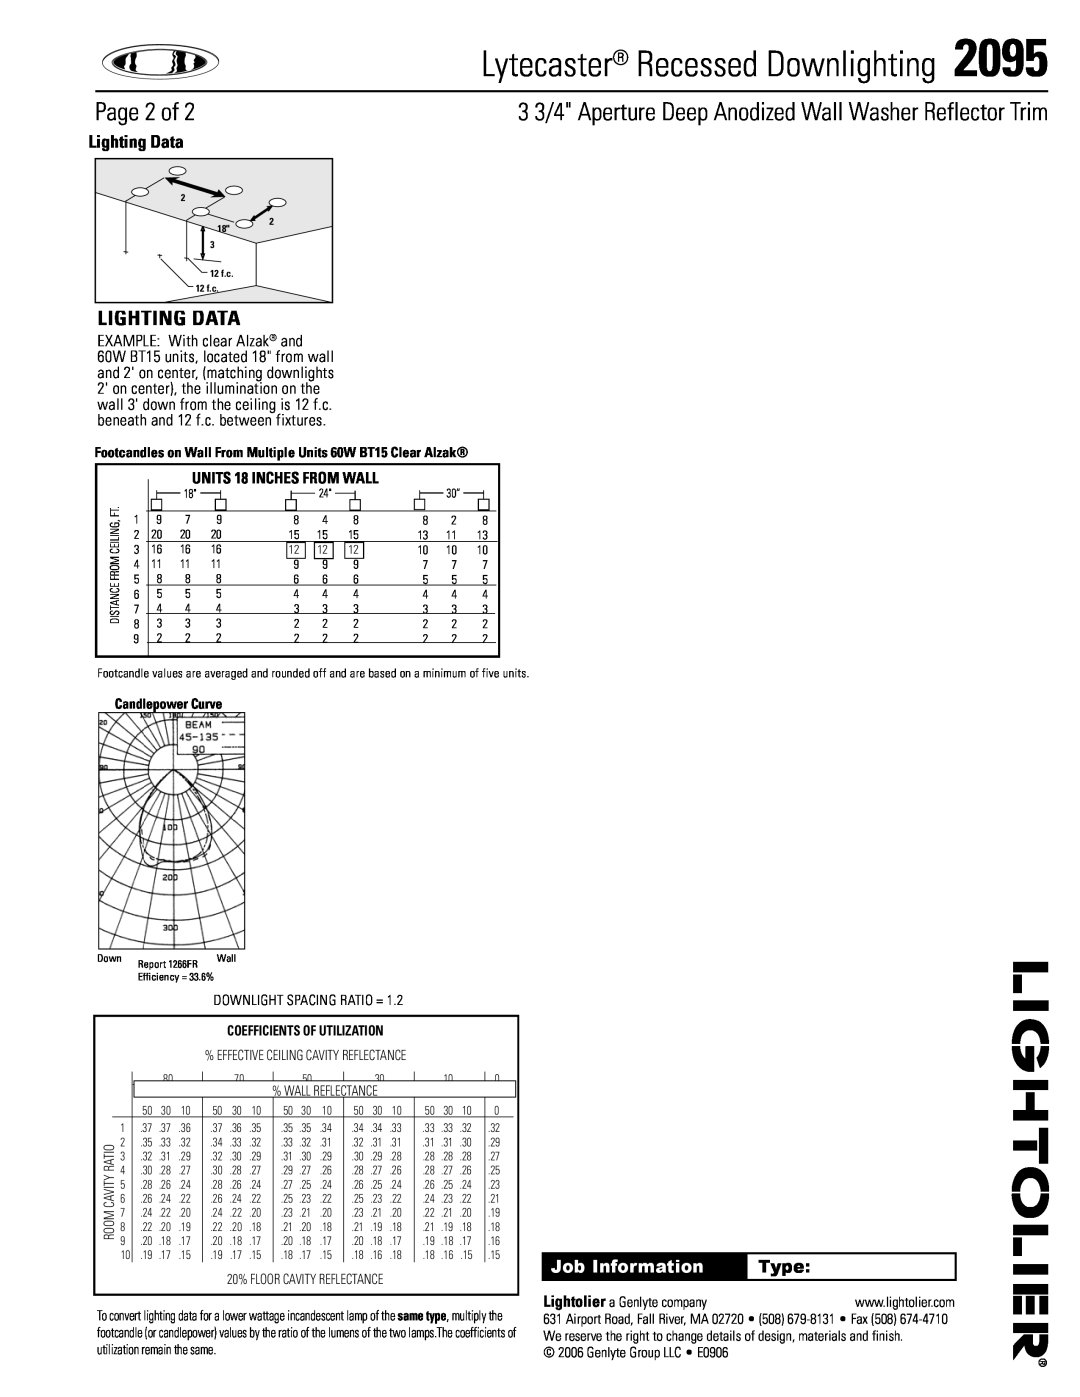 Lightolier 2095 Page 2 of, candlepower Curve, Lytecaster Recessed Downlighting, lighting data, Lighting Data, Type 